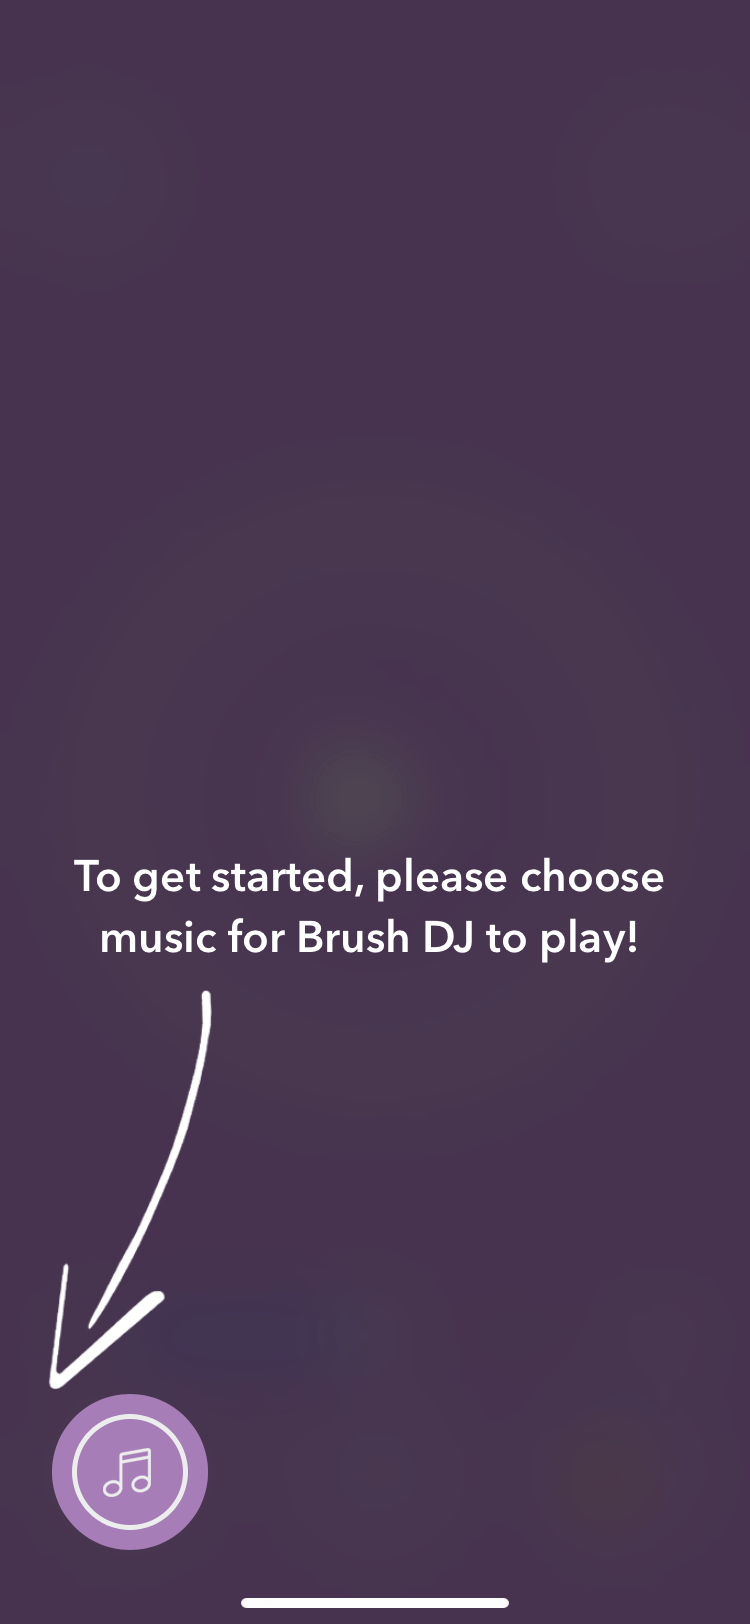 Brush DJ song selection screen